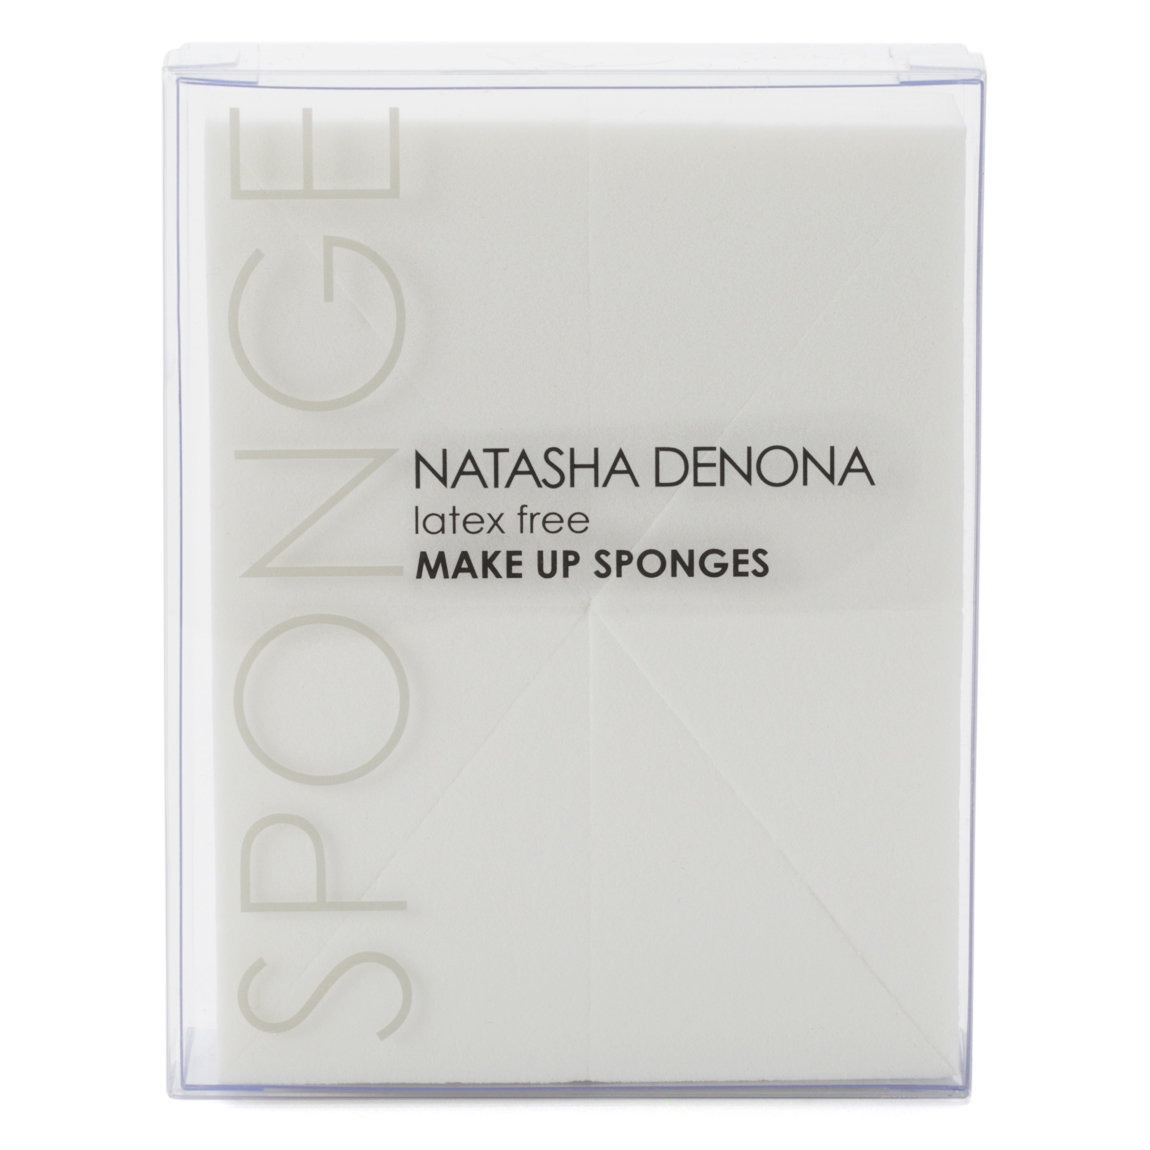 Natasha Denona Makeup Sponges alternative view 1 - product swatch.